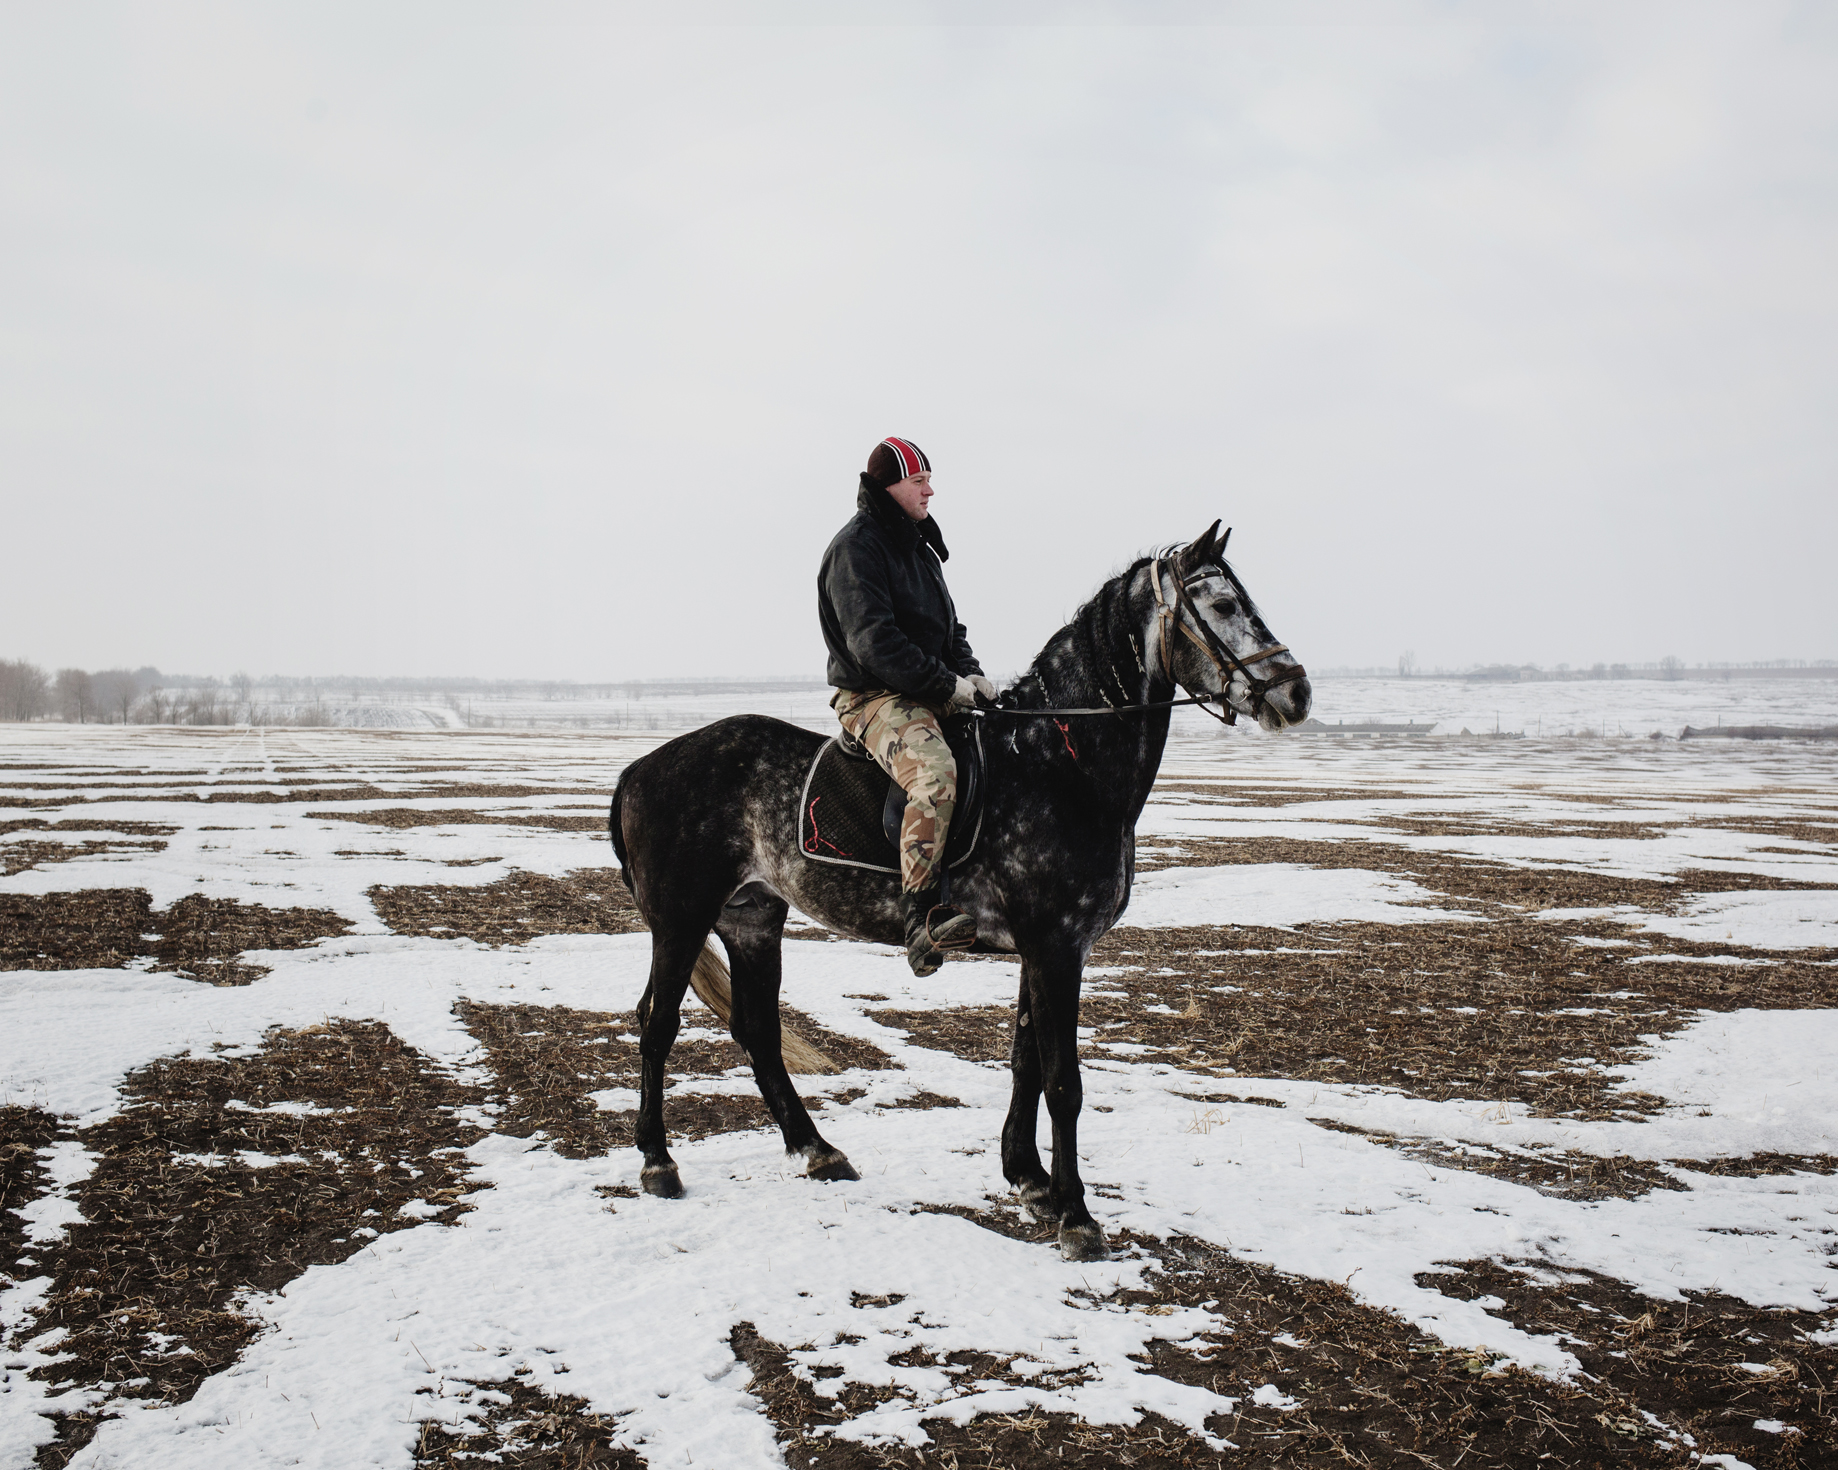  Ceadir-Lunga - In Konstantin Kelesh stud farm, Konstantin’s son trains a horse early in the morning. 